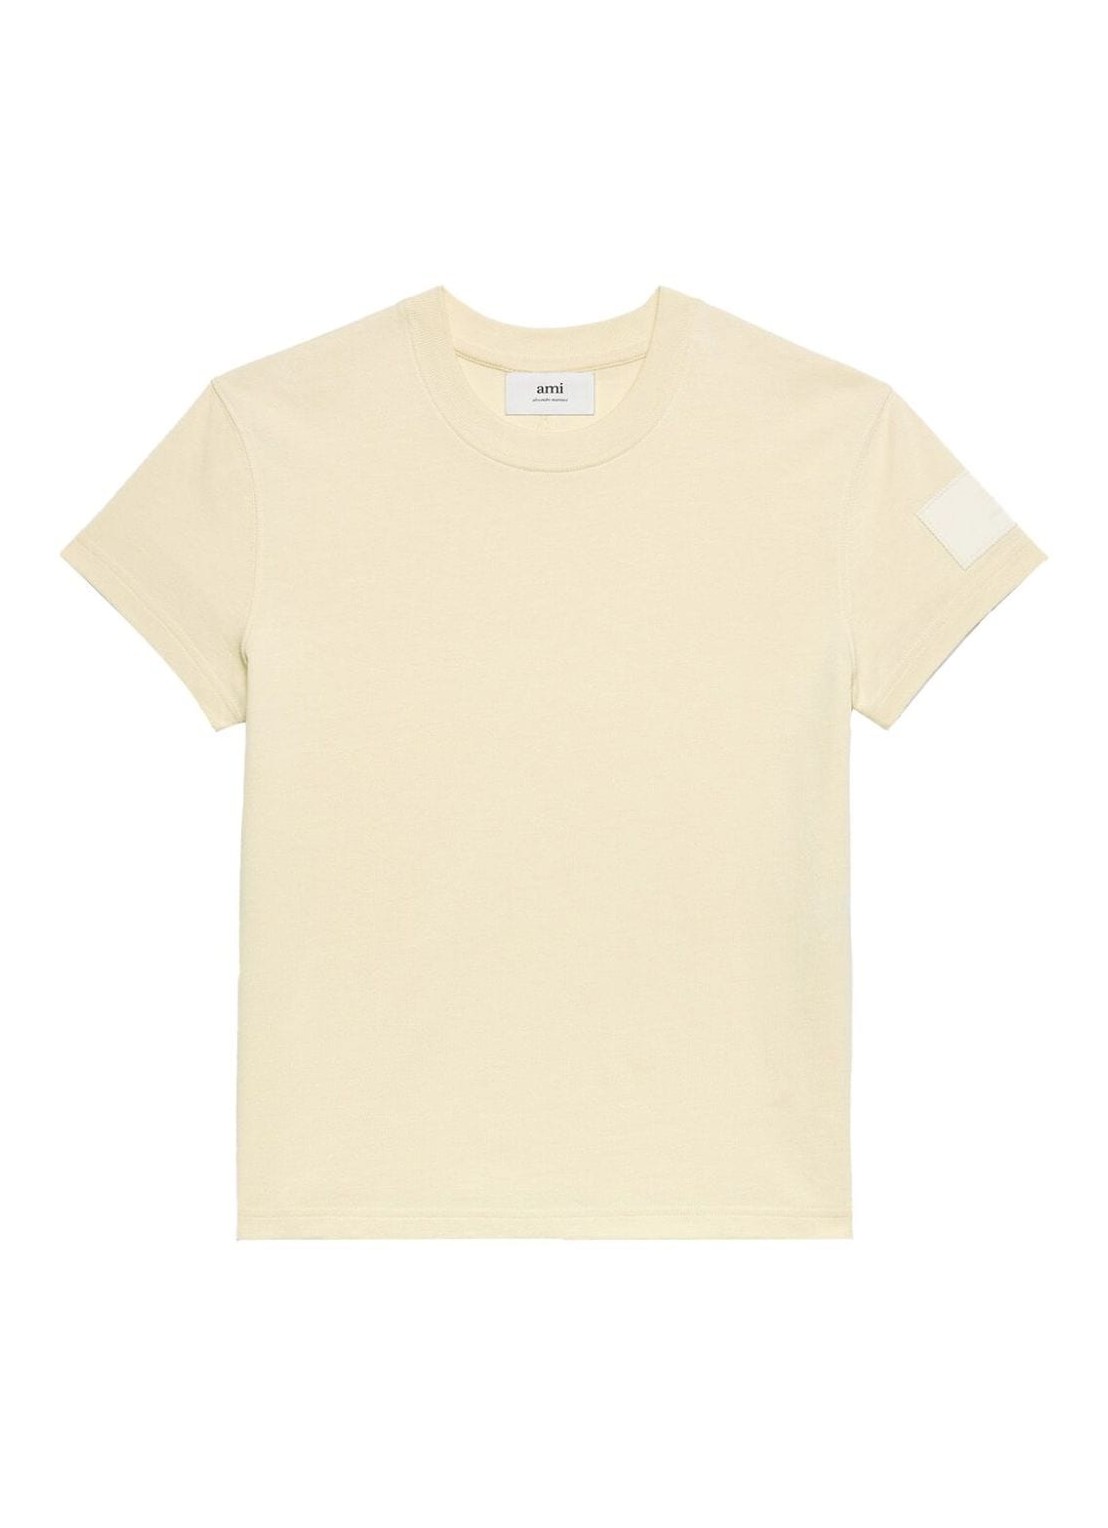 Camiseta ami t-shirt man fade out tshirt uts017726 185 talla beige
 